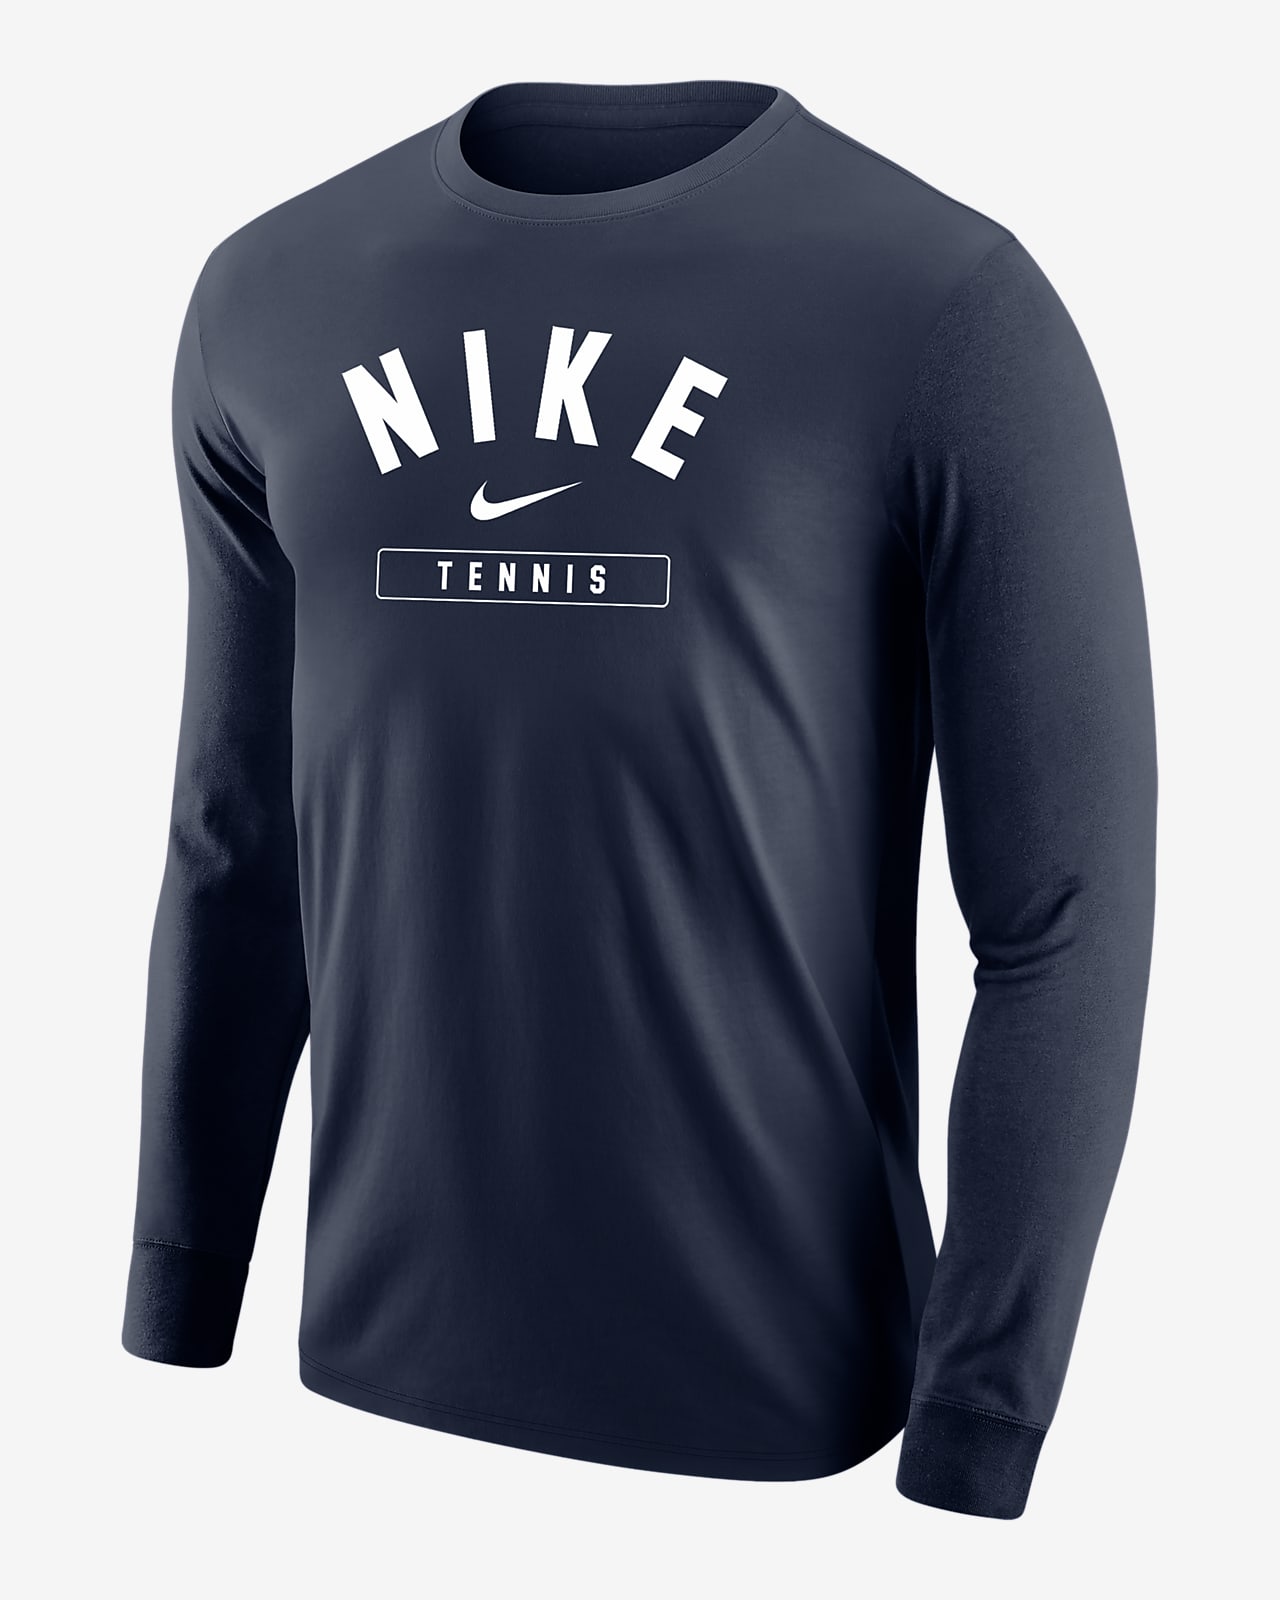 Nike Tennis Men's Long-Sleeve T-Shirt